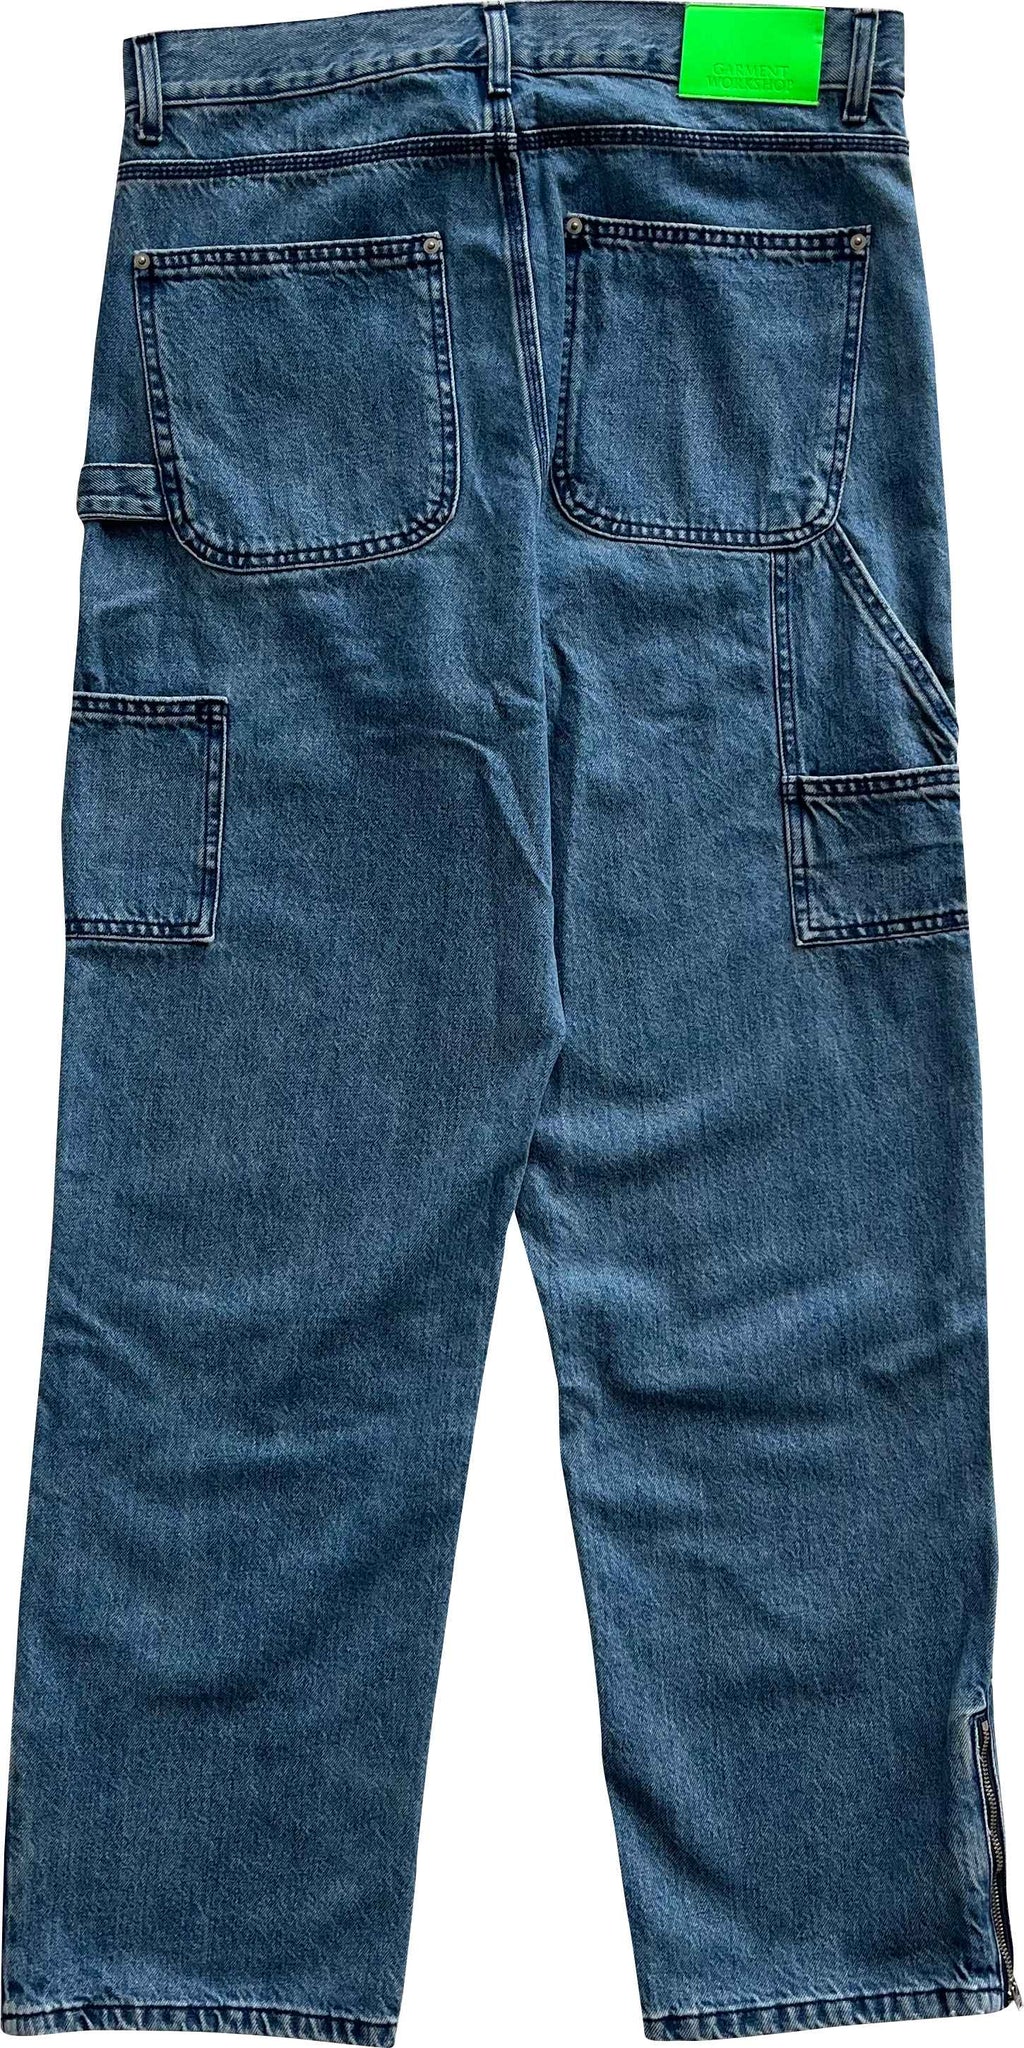  Garment Workshop Jeans Double Knee Work Pant Stonewashed Denim Blue Uomo